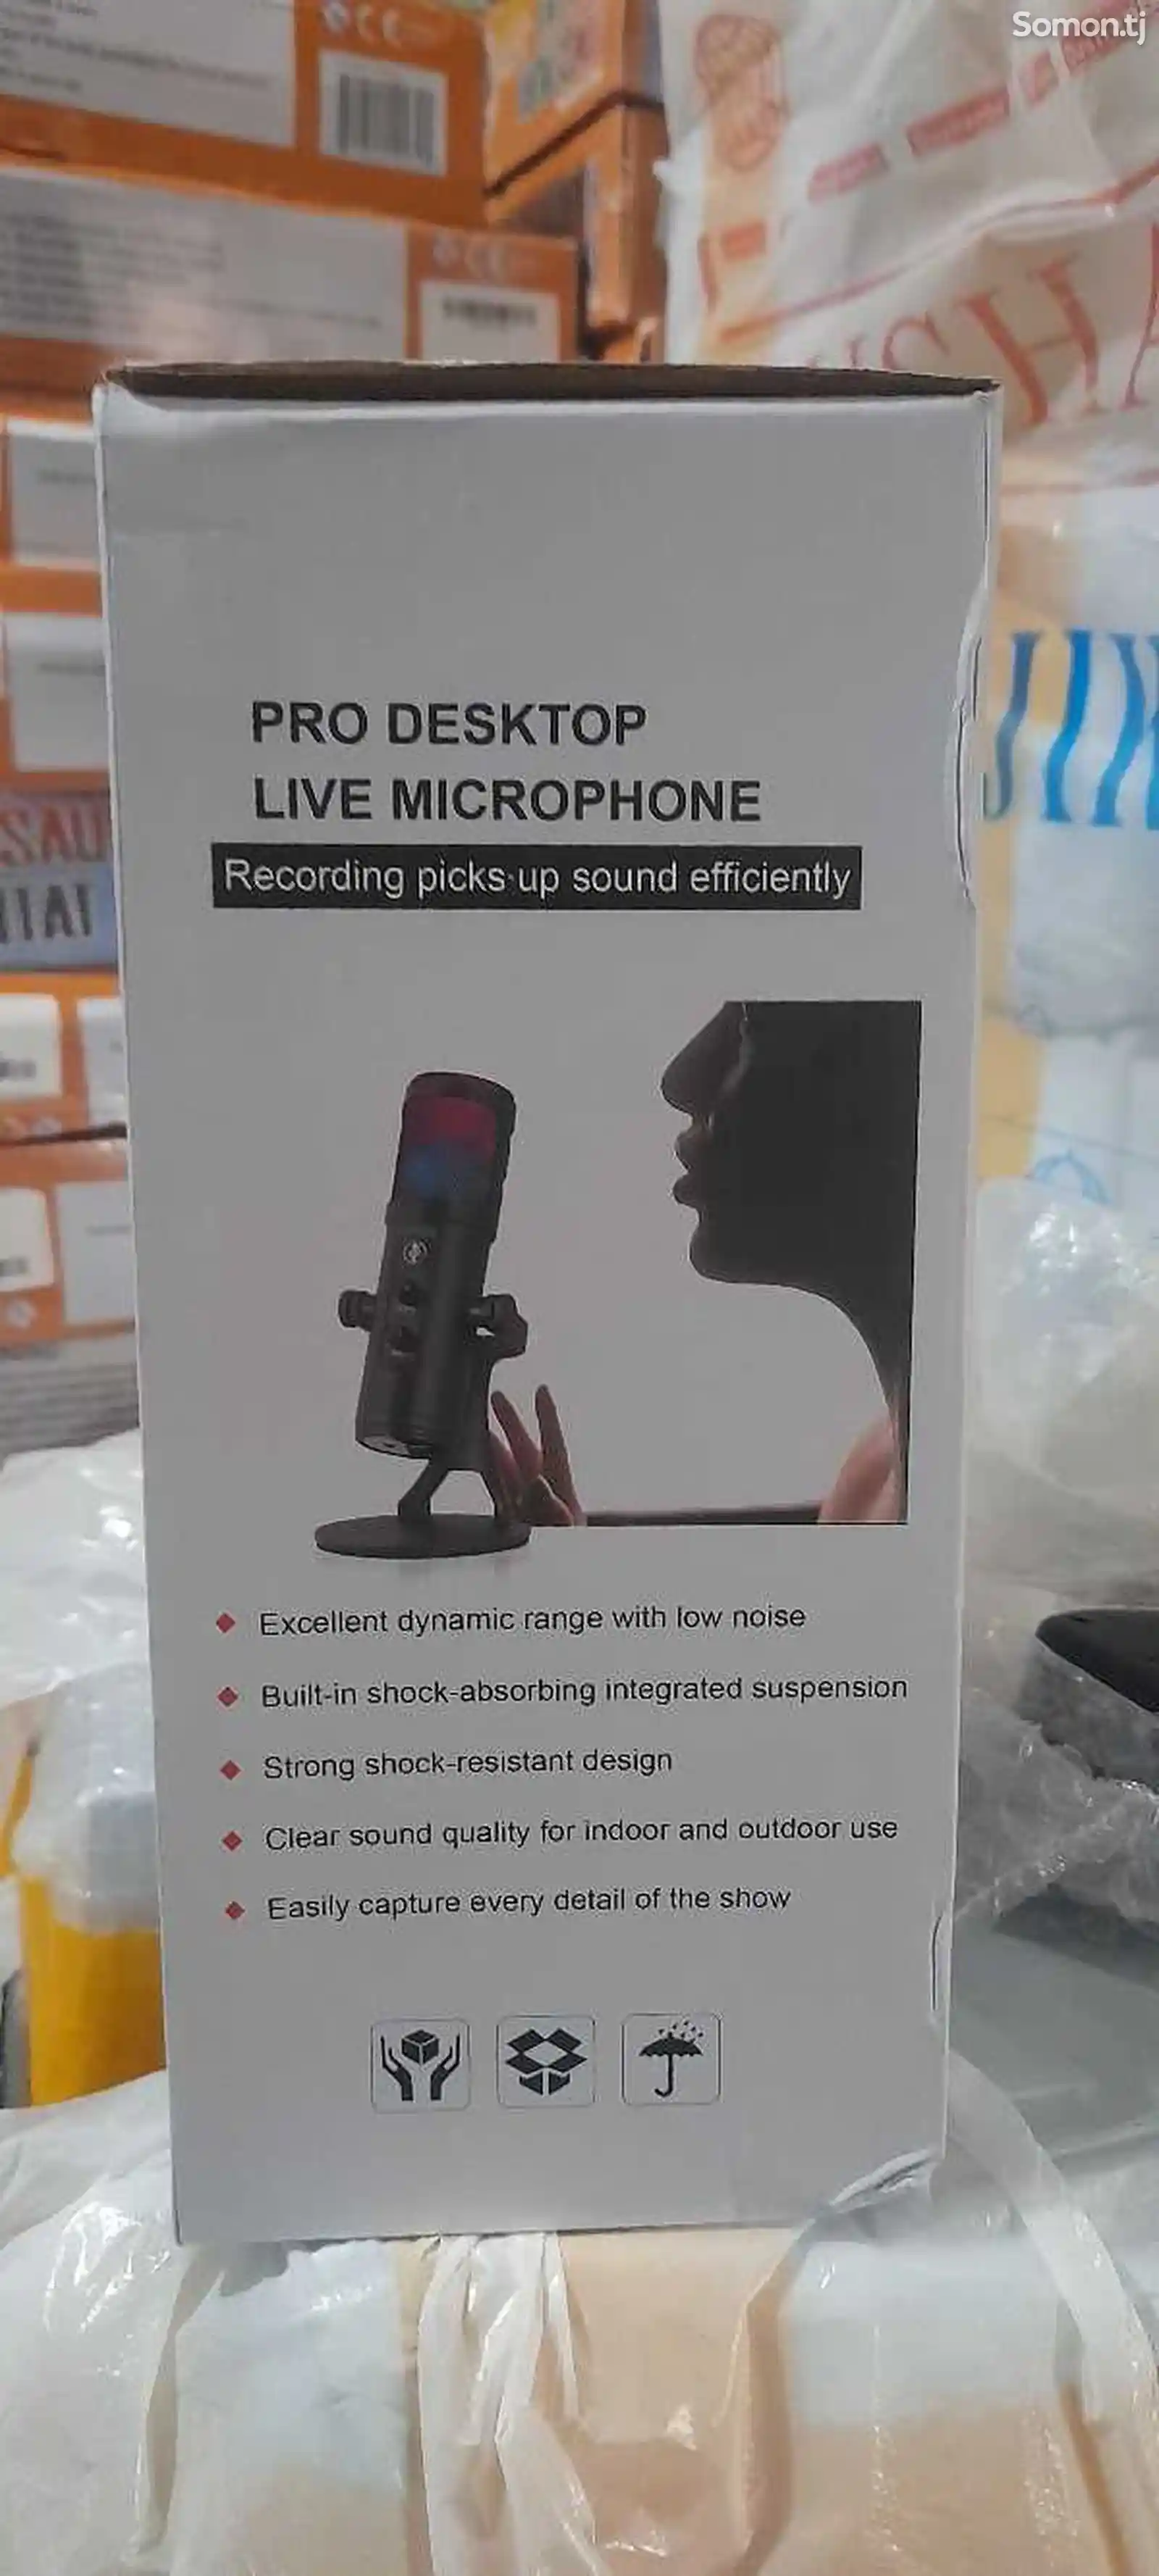 Микрофон-1